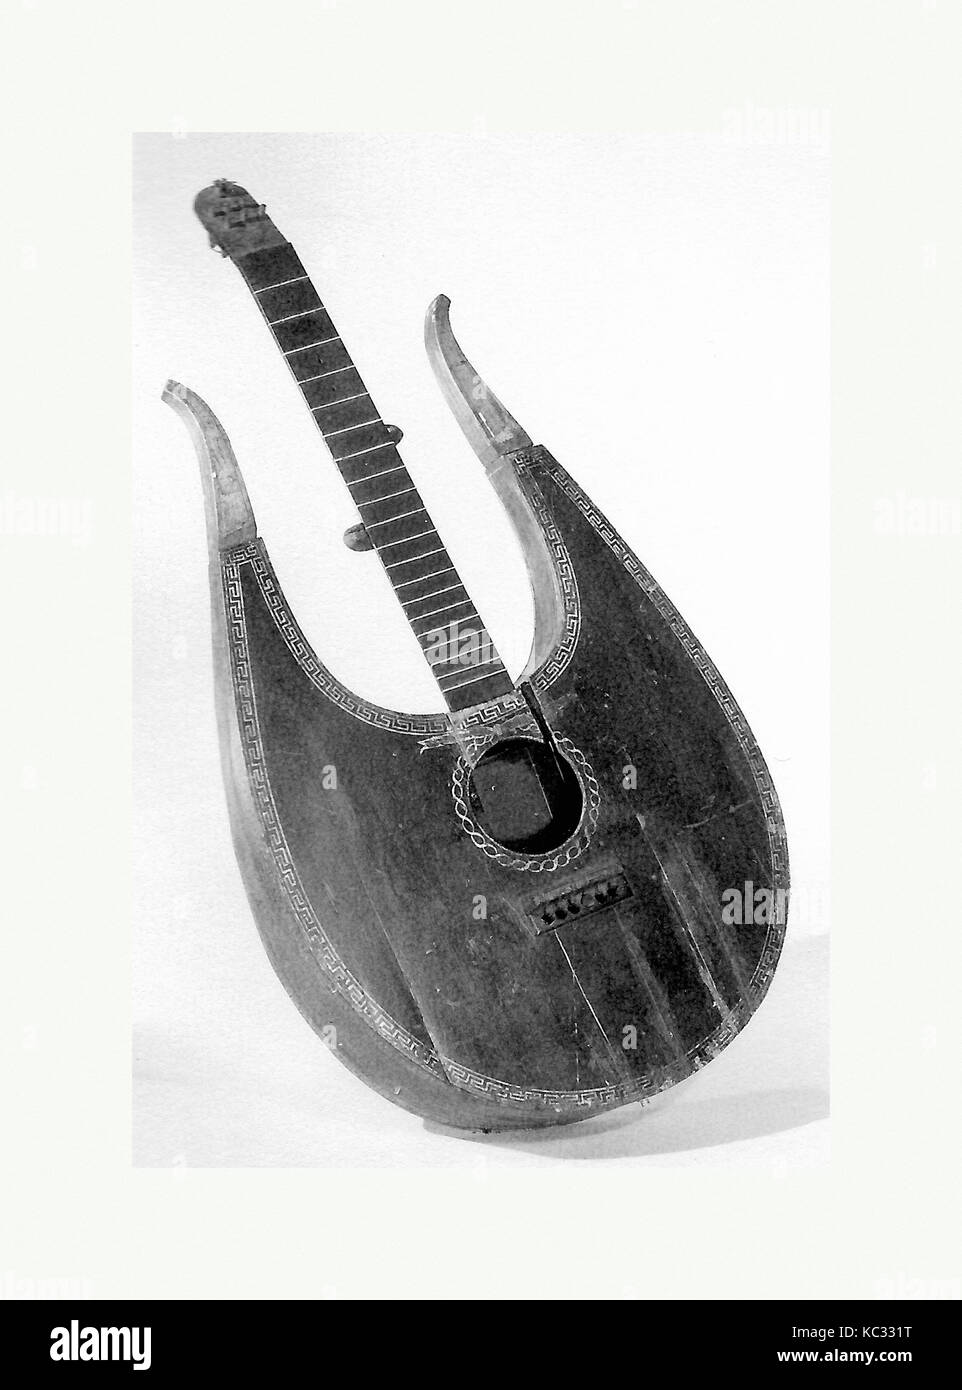 Chitarra Lyra, ca. 1800, Europeo, legno, avorio, metallo, L. 30 a. (76,2  cm), Chordophone-Lute-presentate spennate-traforato Foto stock - Alamy